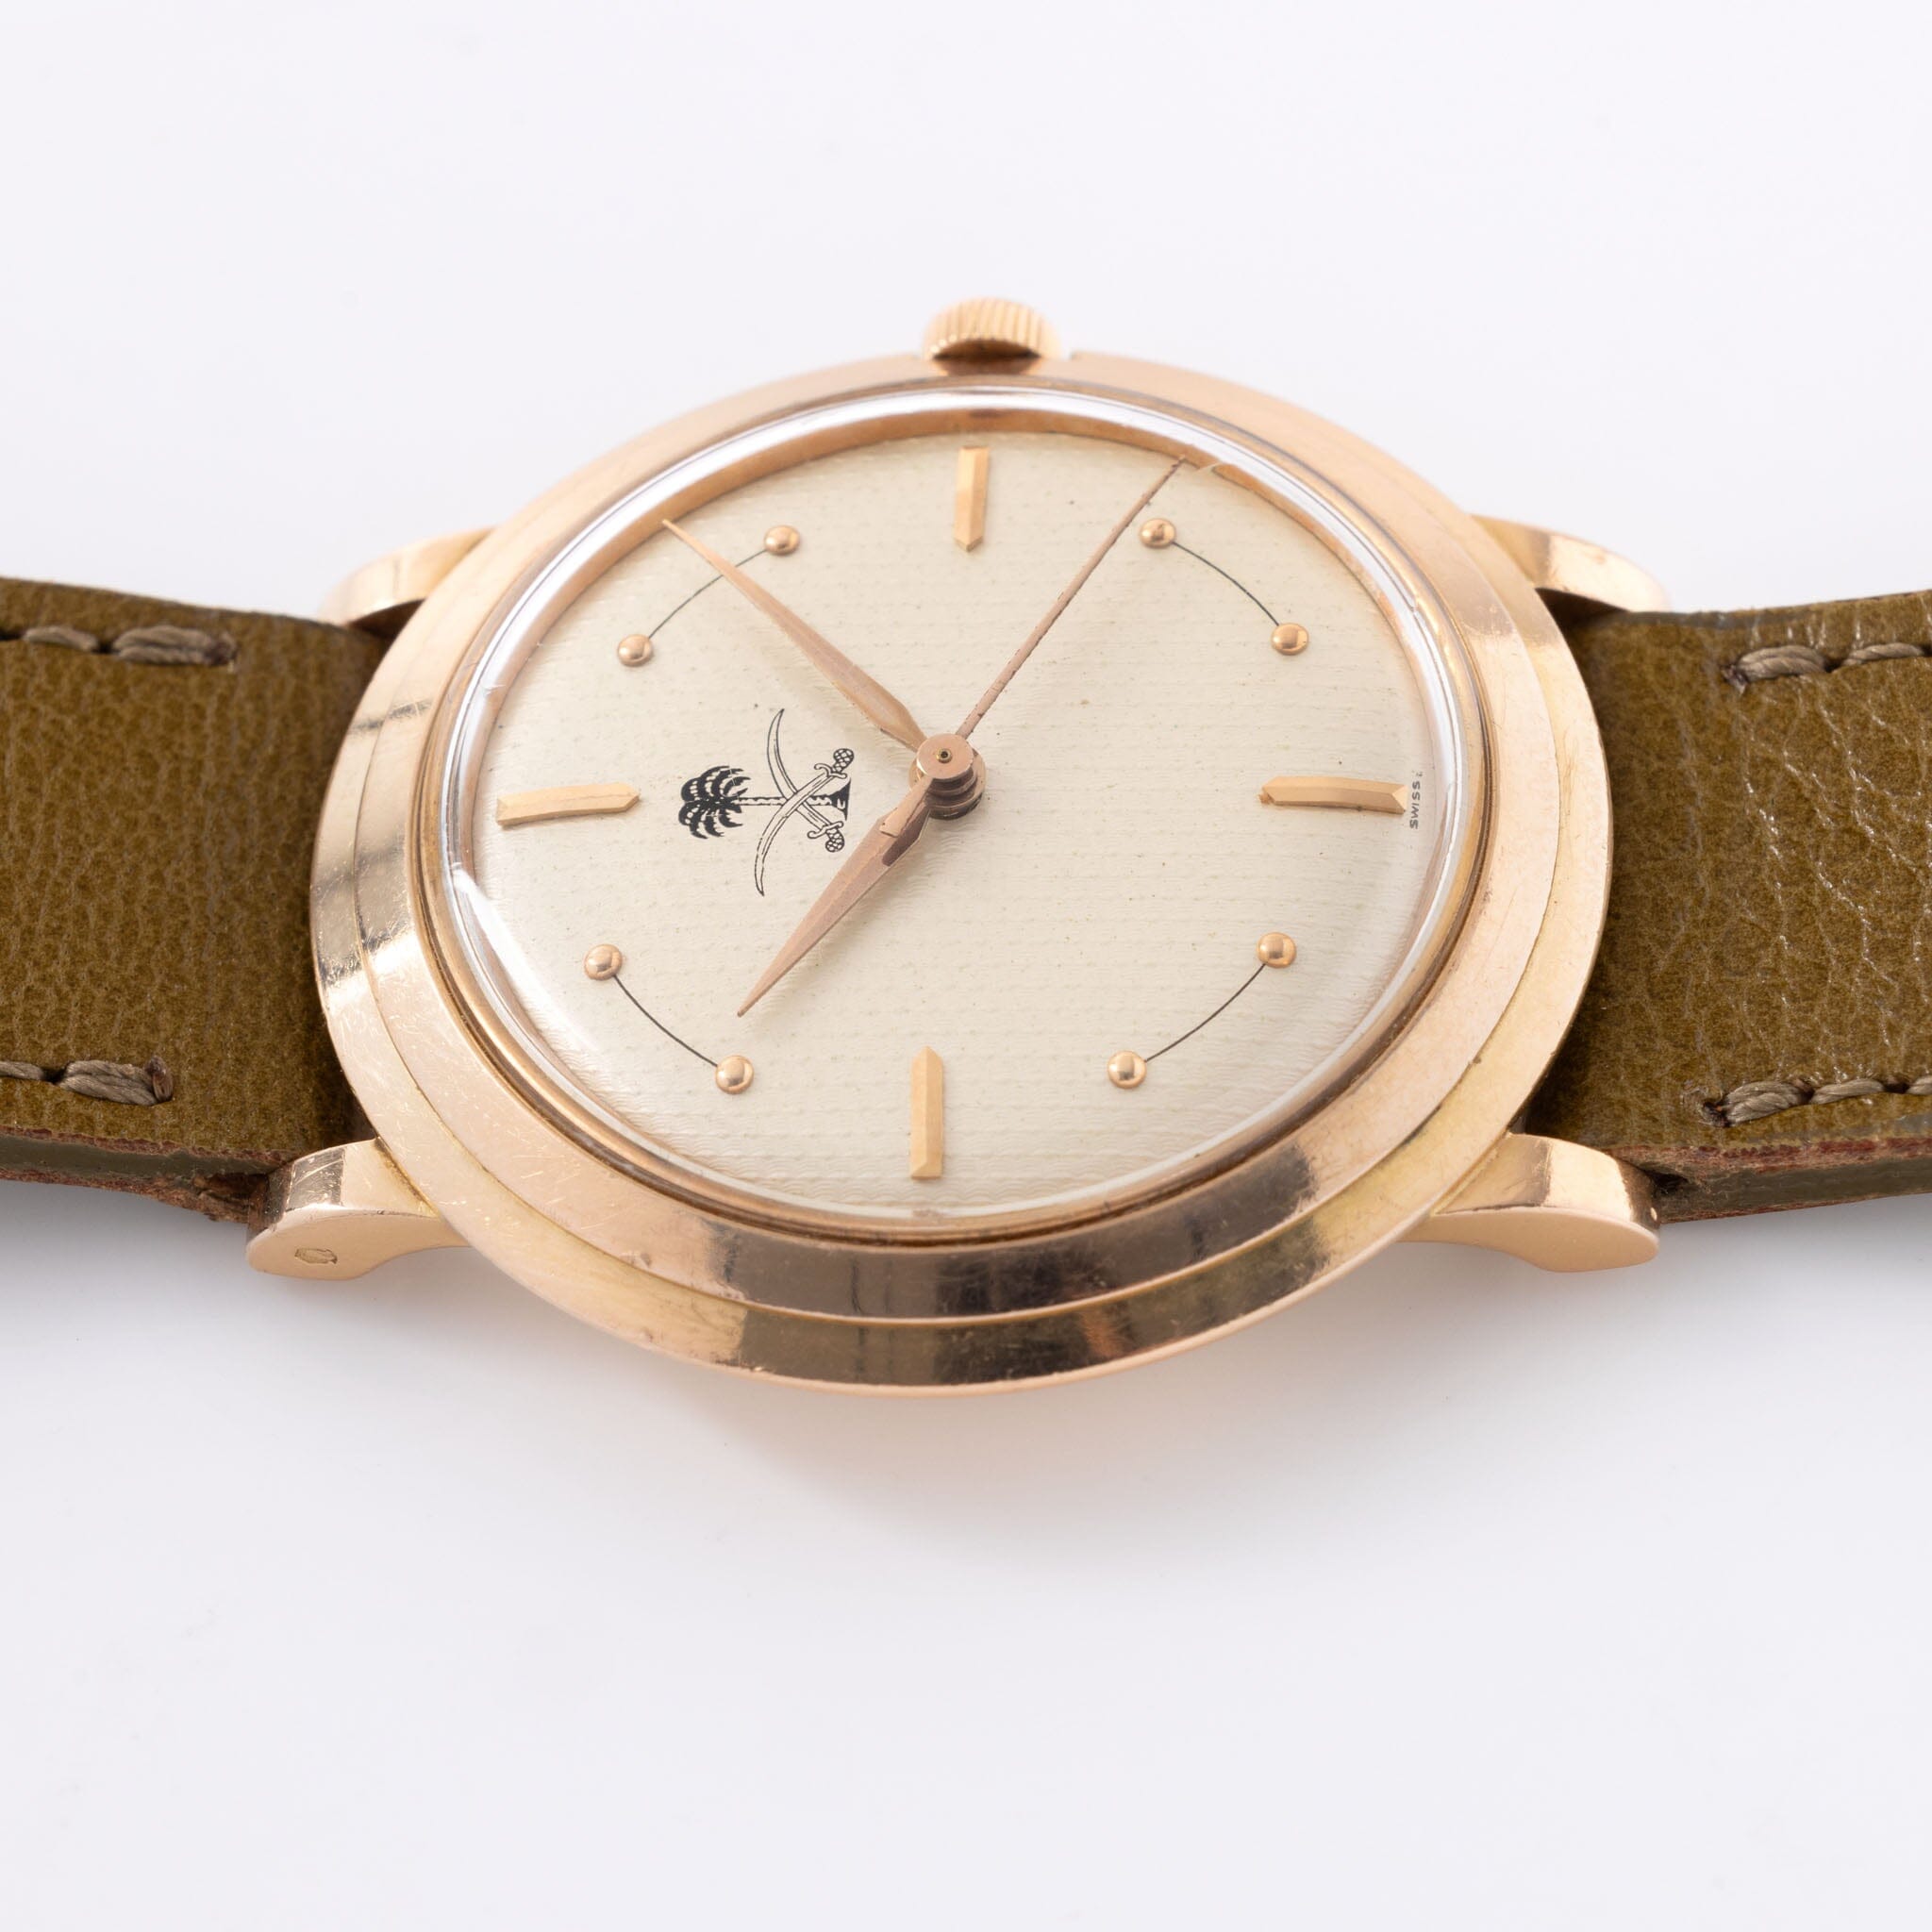 Rare Longines Presence 9k gold watch with Saudi Arabia Al-Yamamah dial |  eBay